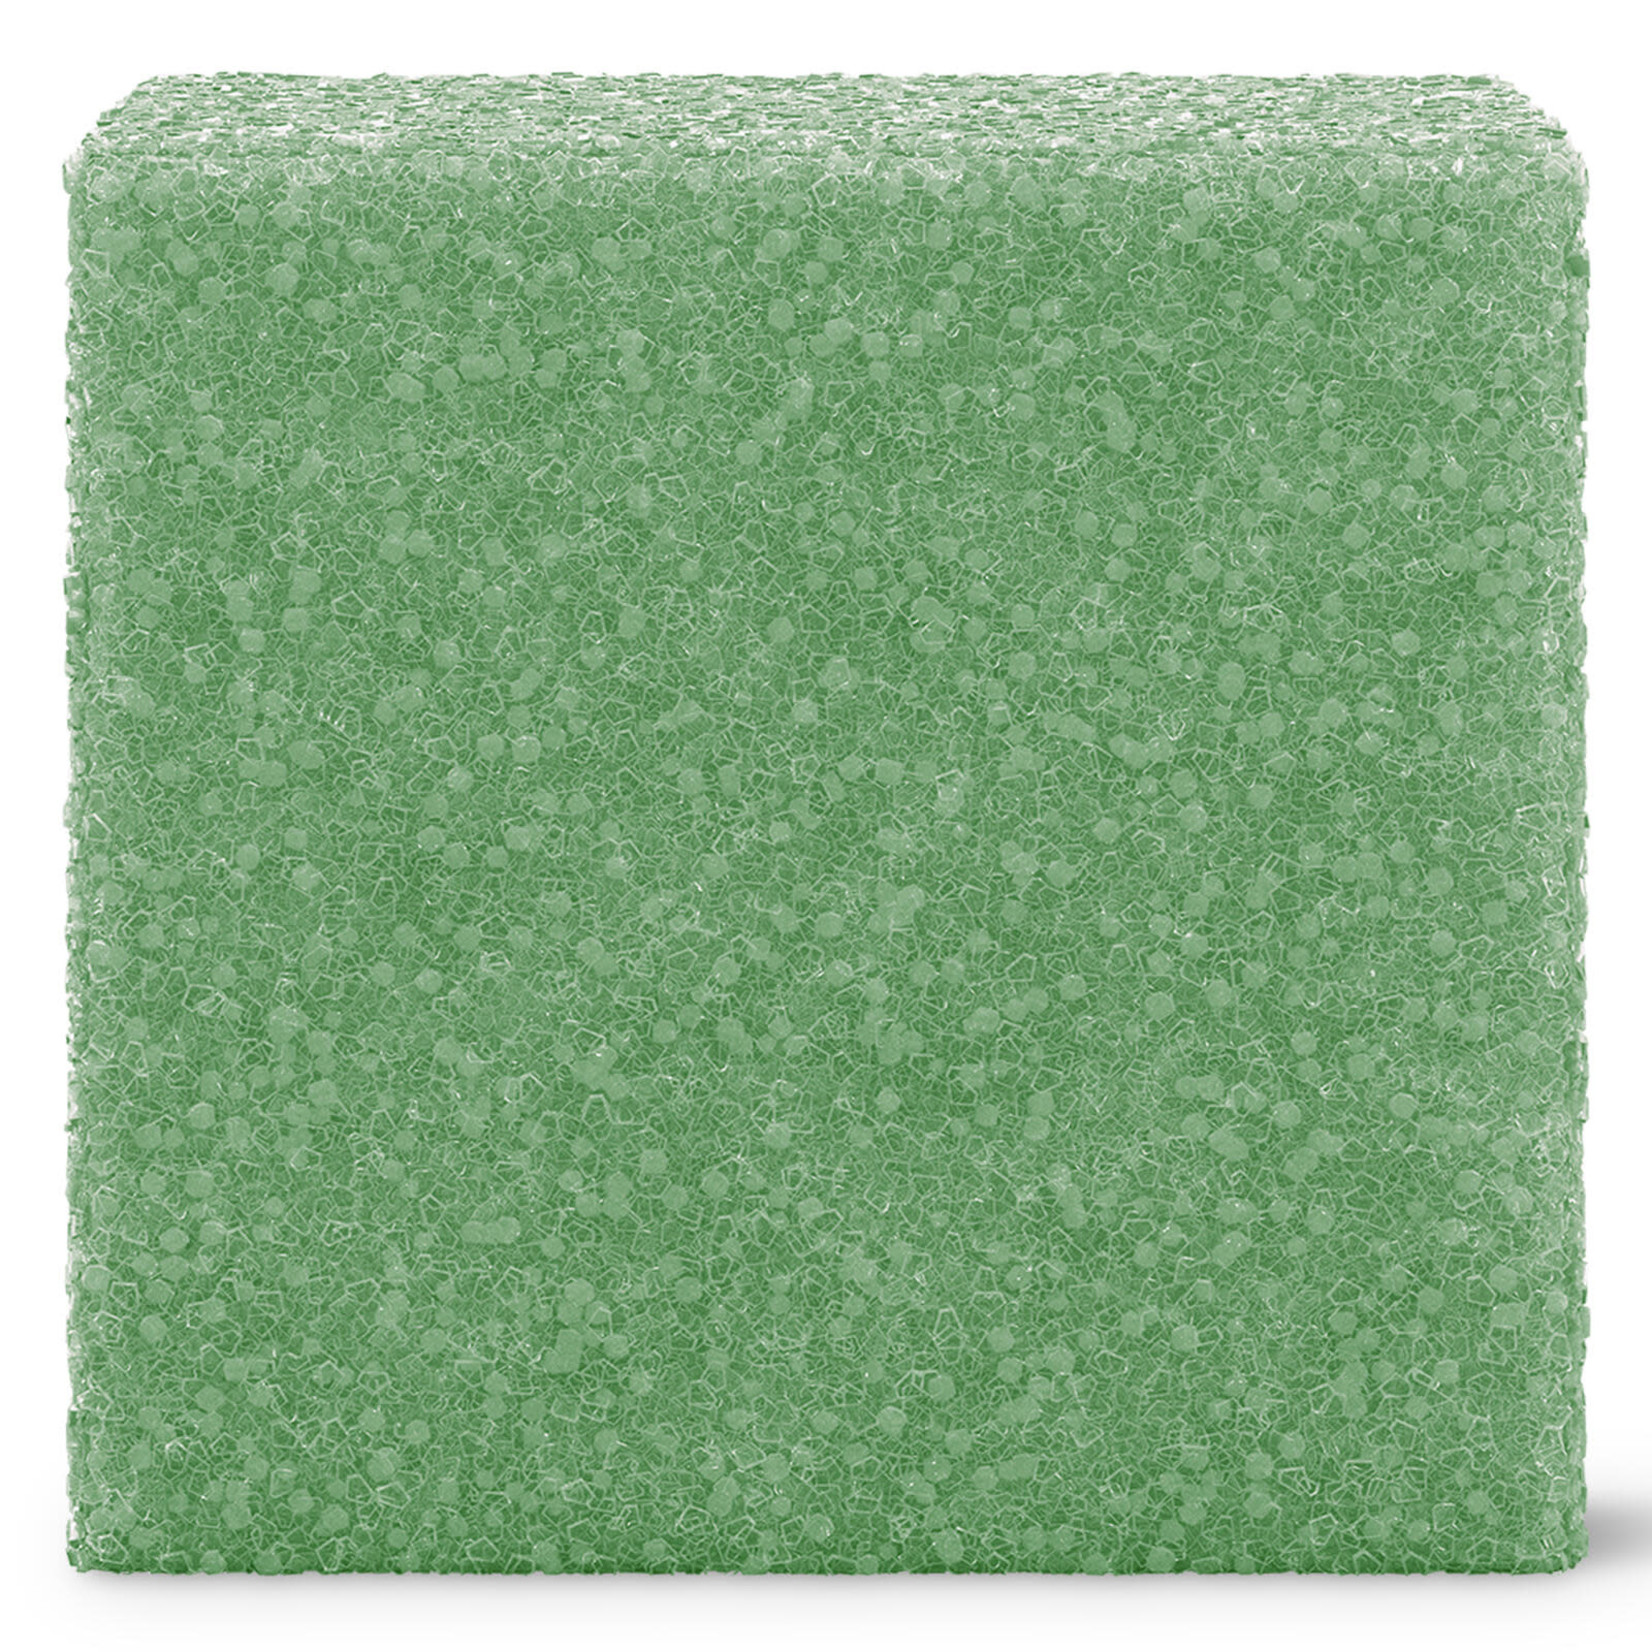 5" x 5" x 5" STYROFOAM  Cube - Green